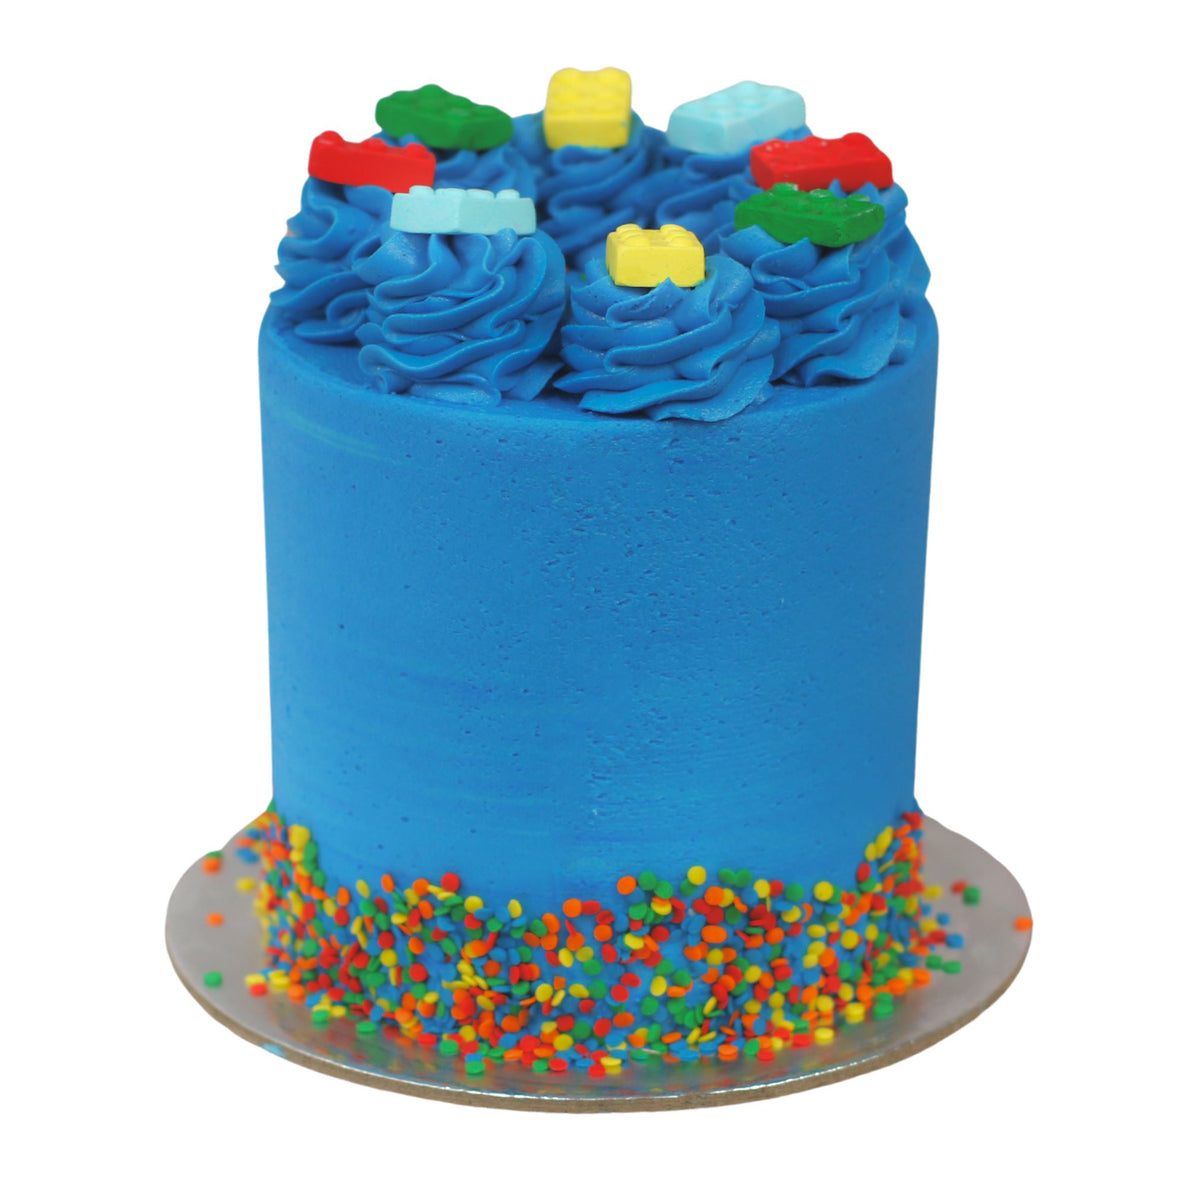 Lego Cake Cakes The Cupcake Queens 